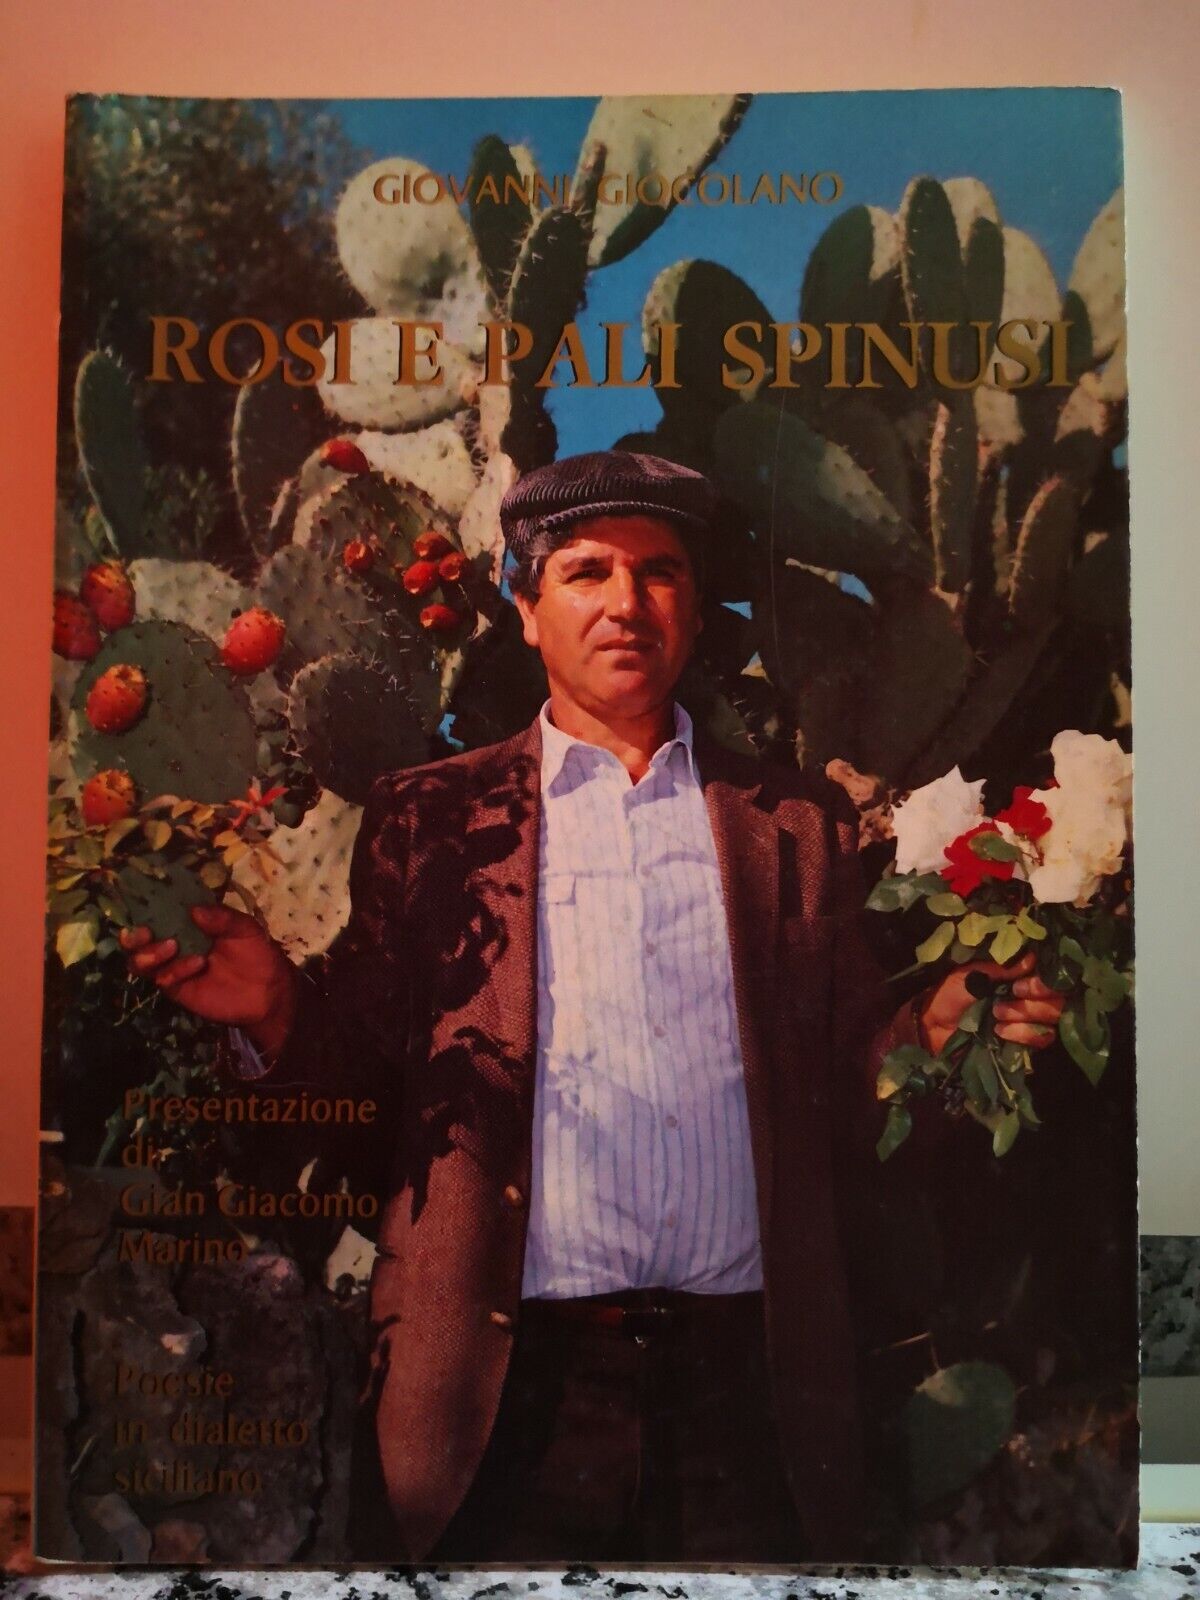 Rosi e Pali Spinusi  di Giovanni Giocolano,  1986,  Gian Giacomo Marino-F